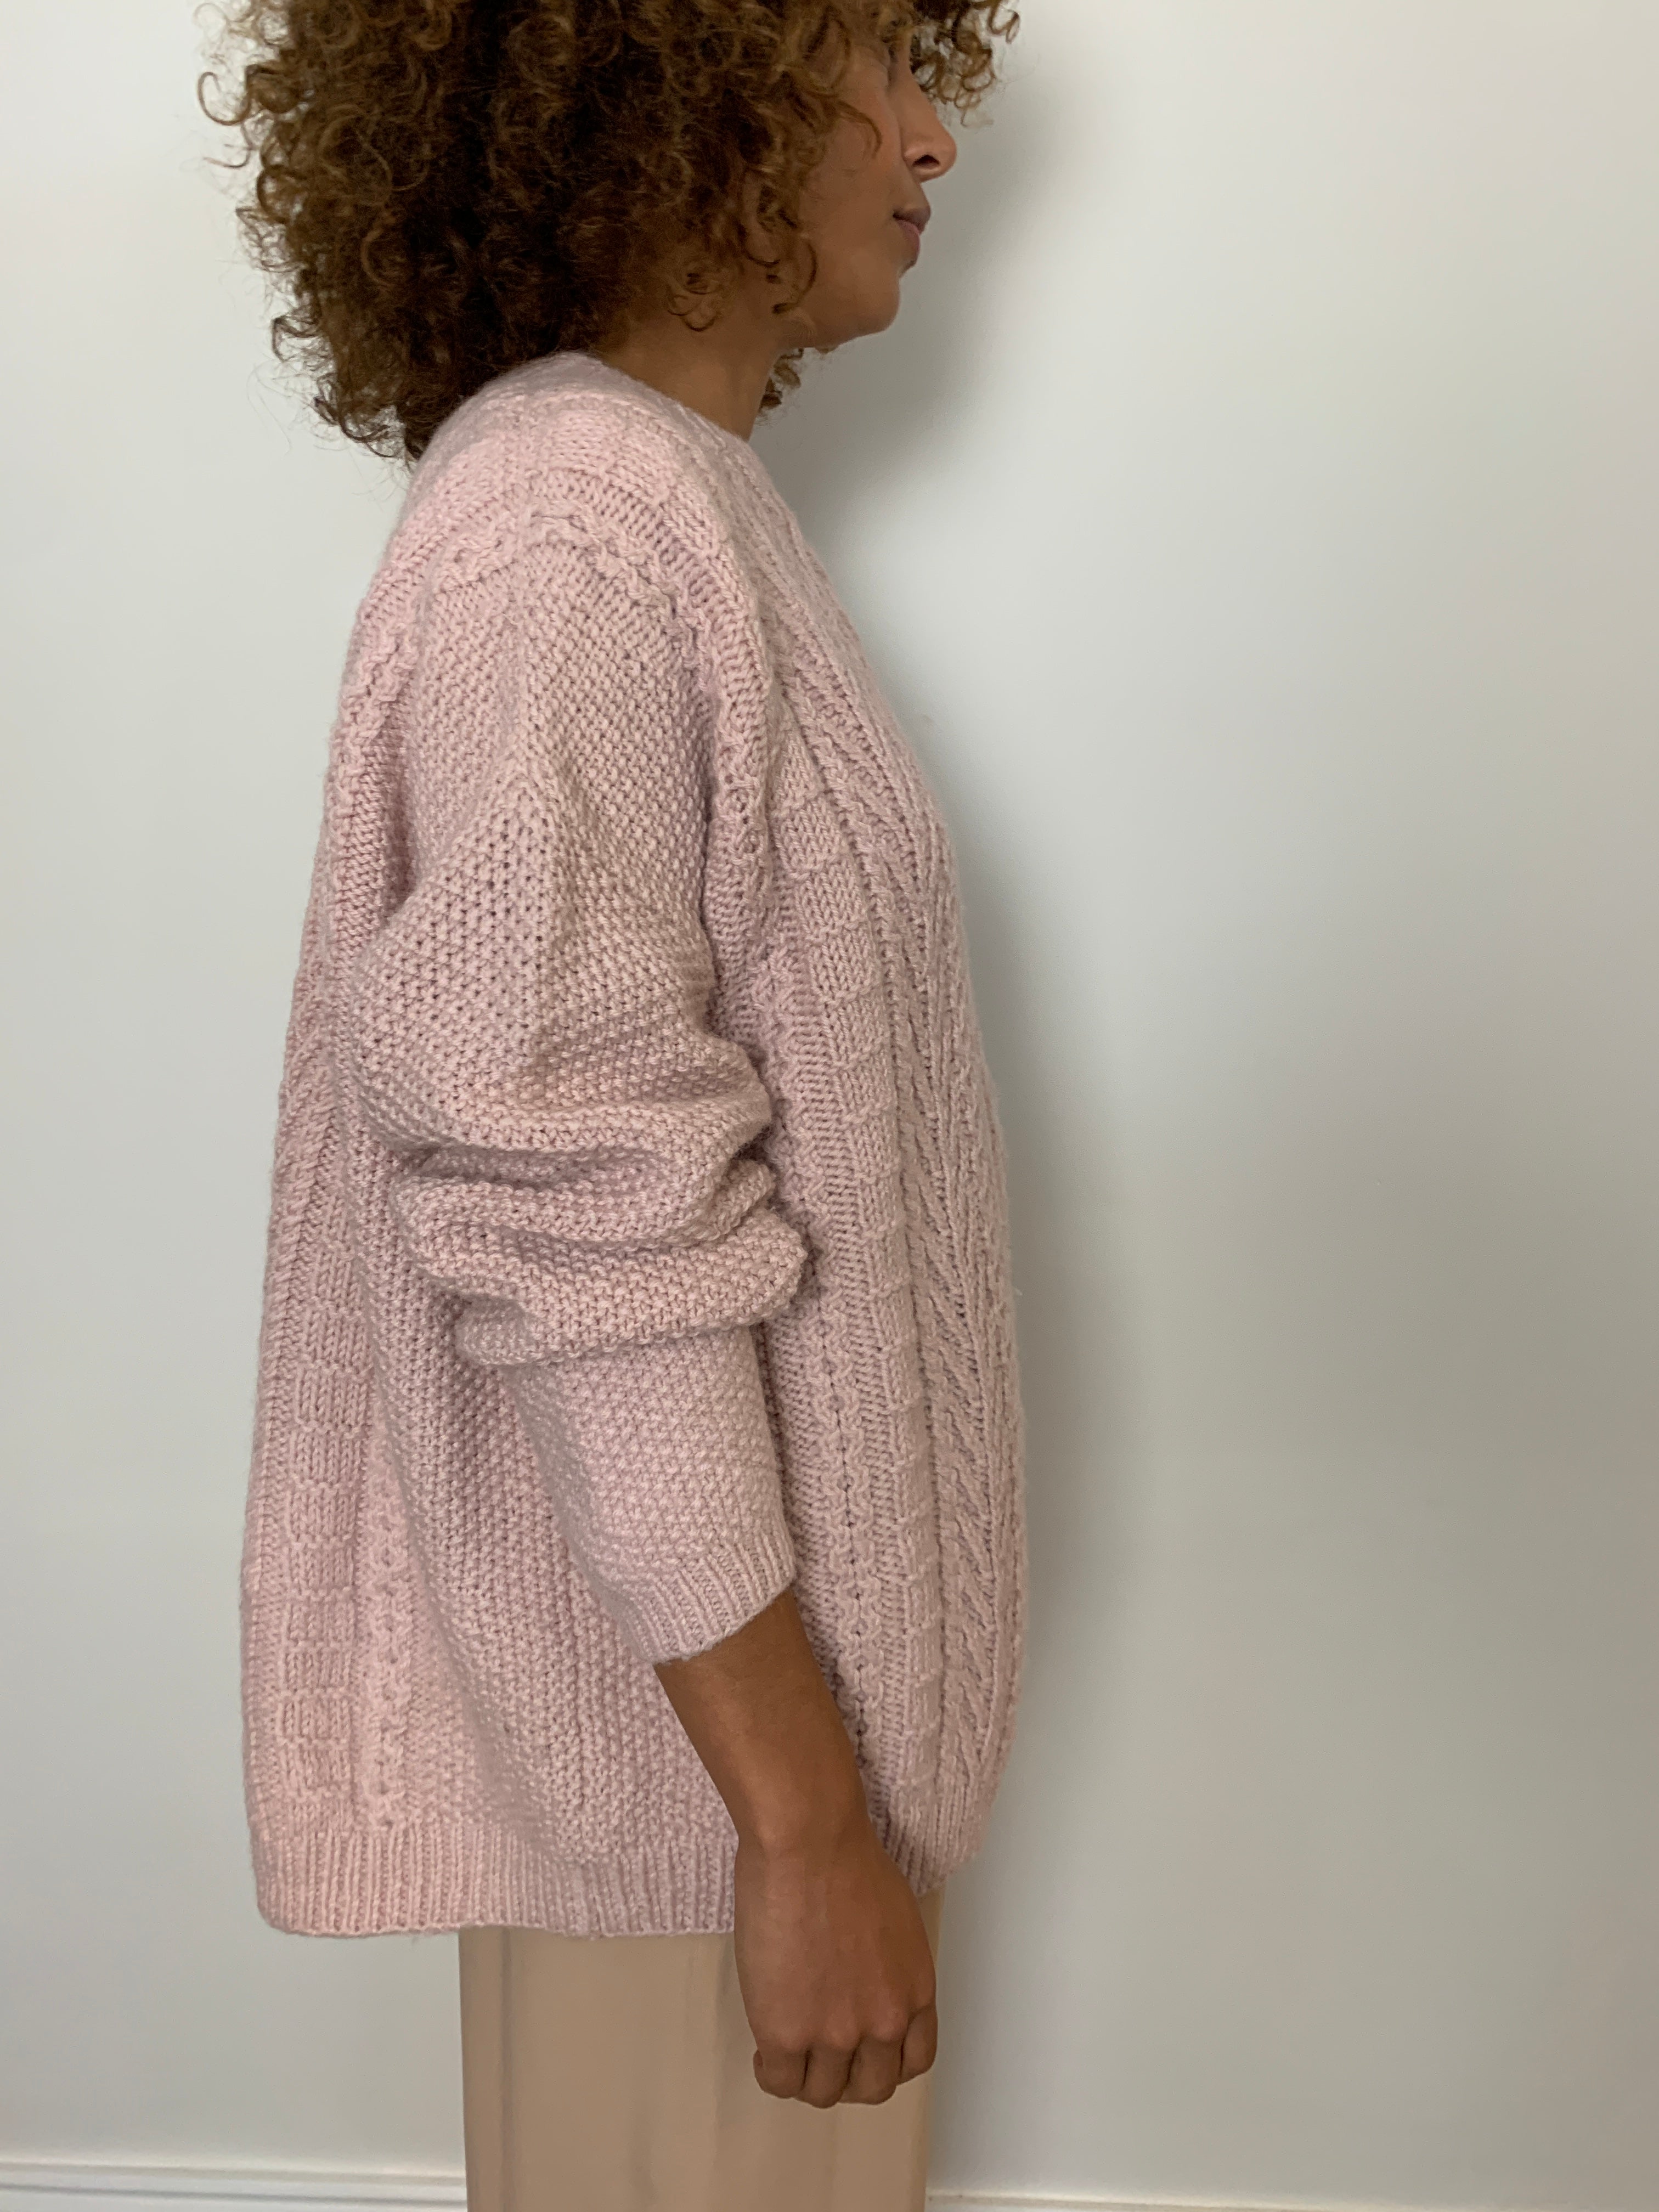 Vintage Ellen Tracy for Neiman Marcus wool jumper